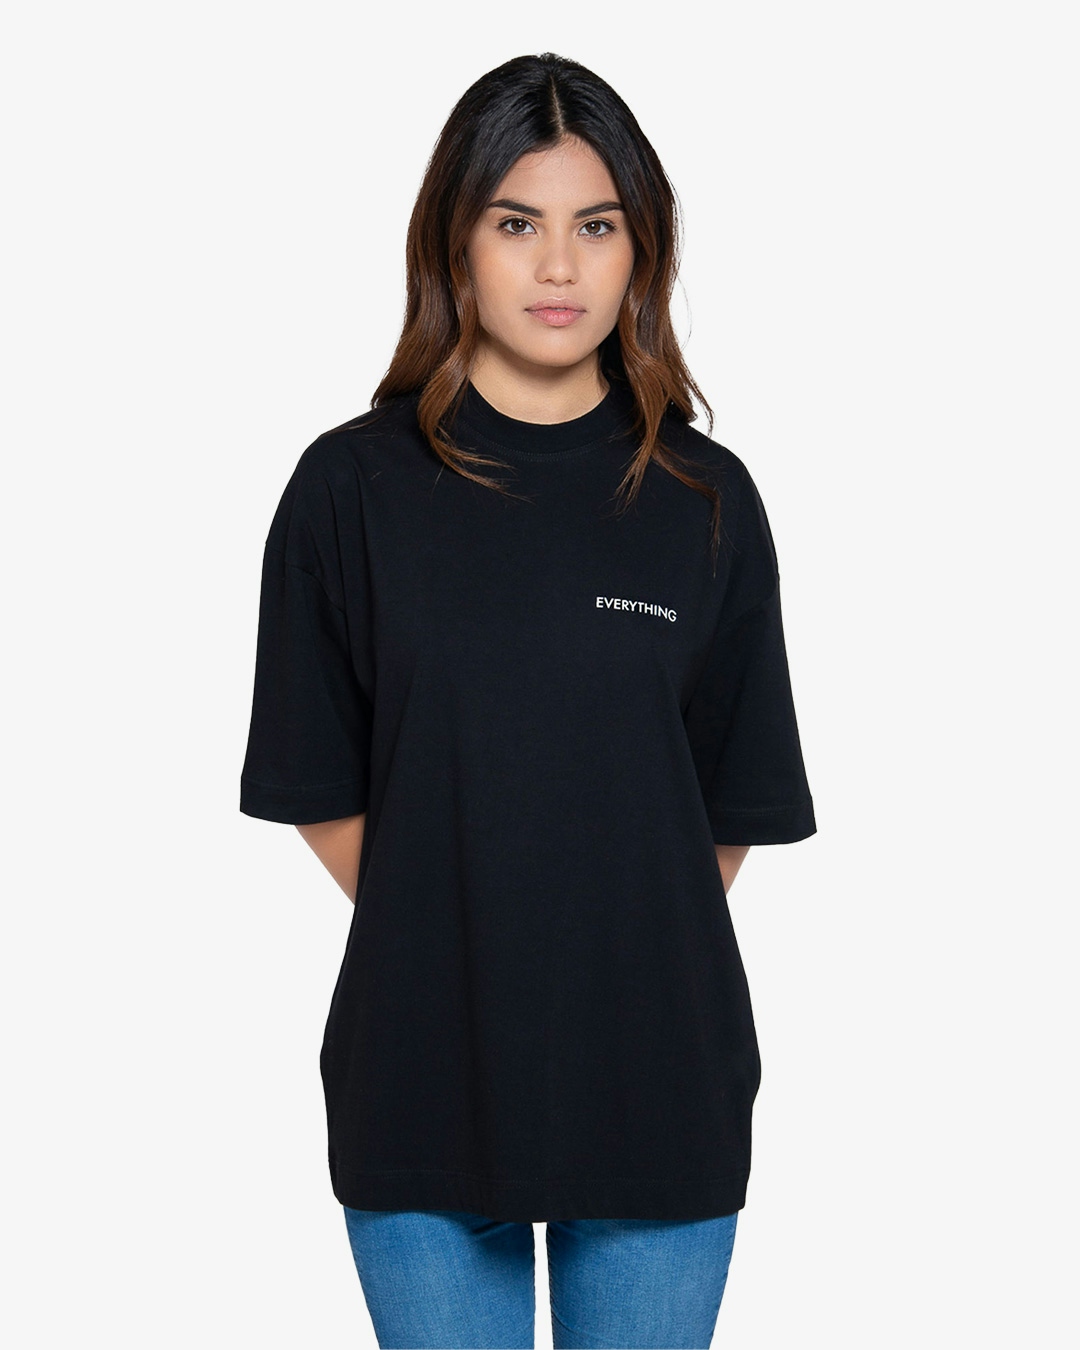 Rafael Fresco S/S Box T-Shirt - Black